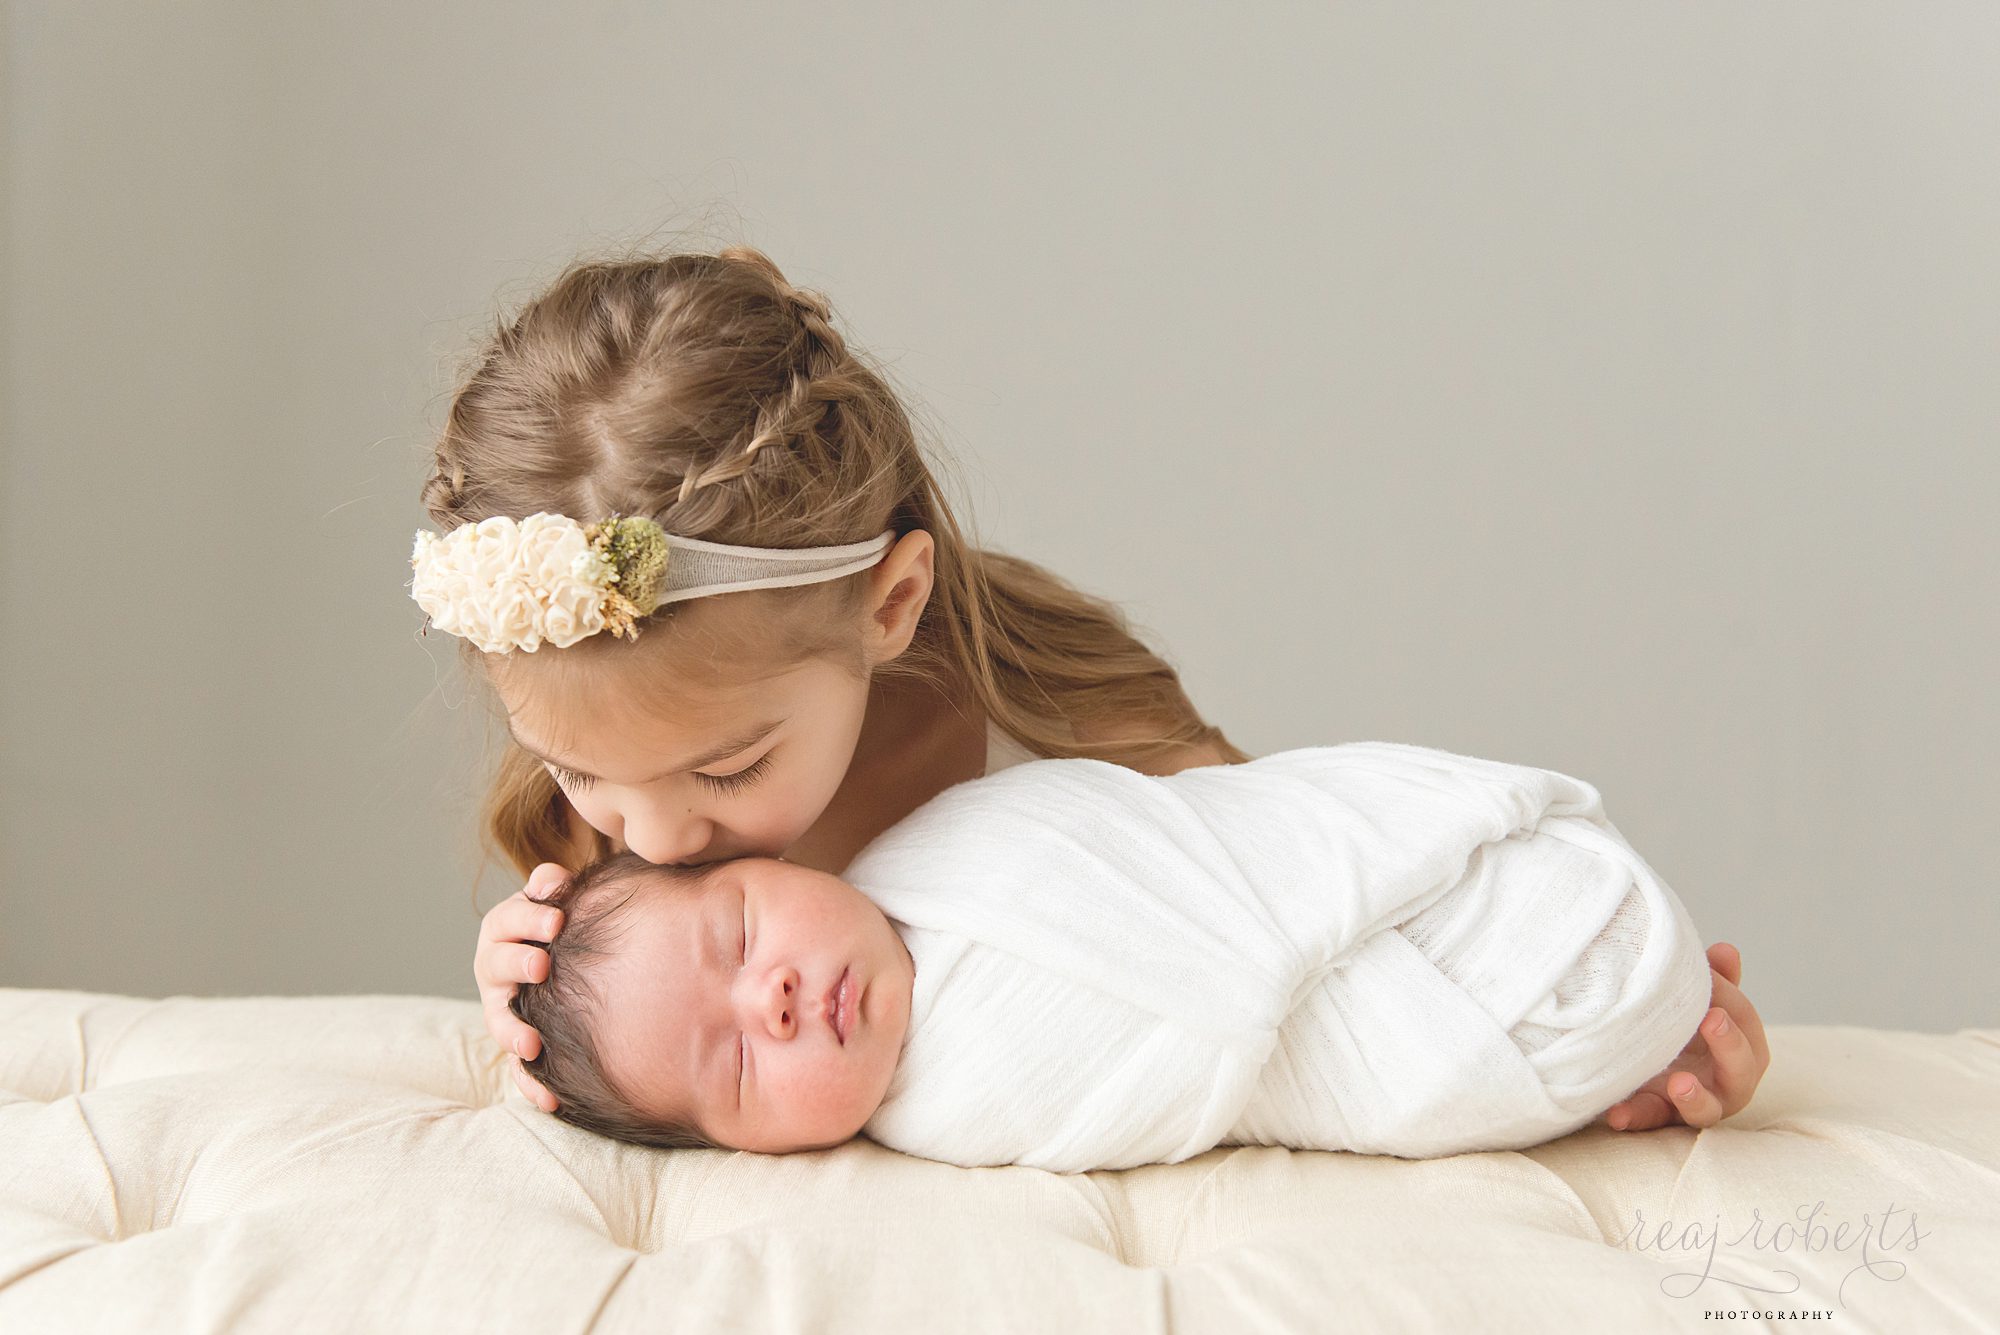 Chandler Baby Photographer | Reaj Roberts Photography | siblings photos with big sister kissing newborn